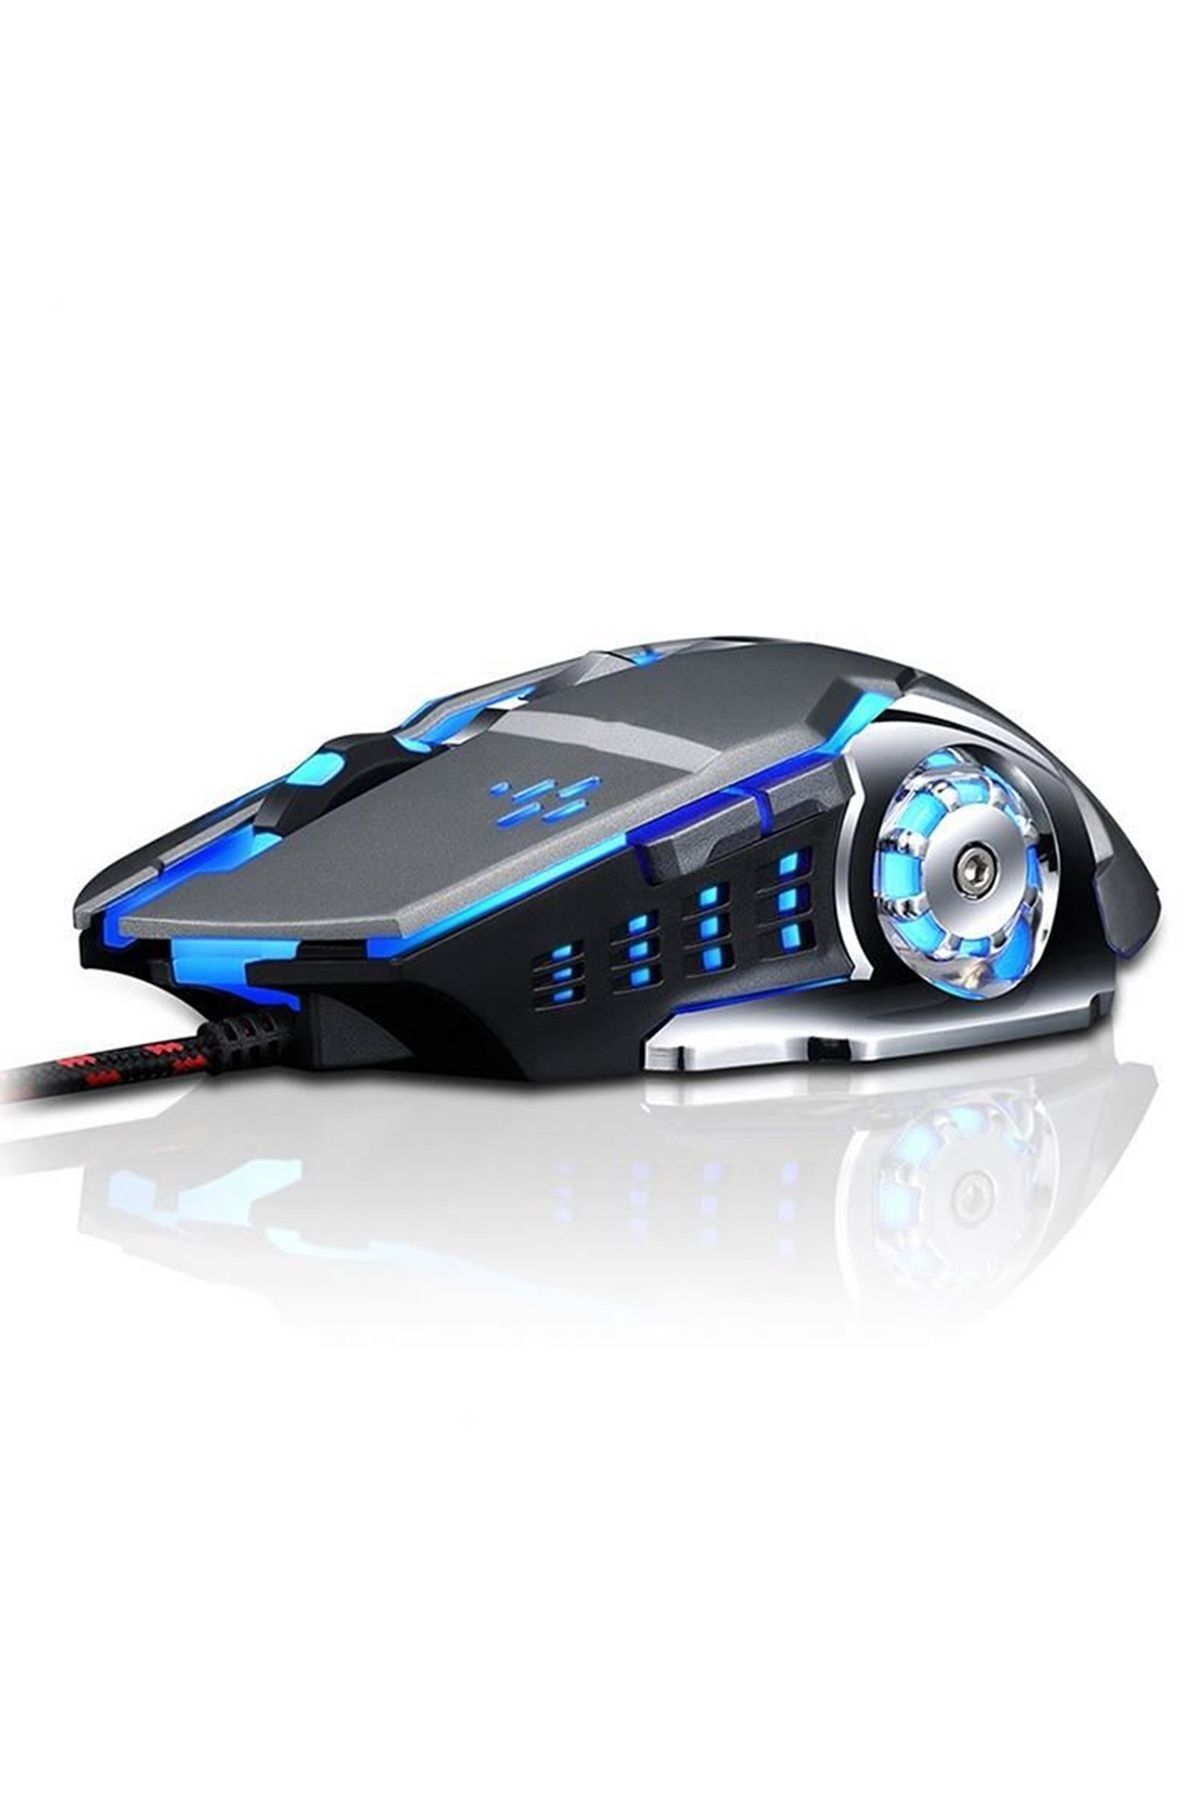 Reidan X15 Rgb Mouse Işıklı 7200 Dpi Gaming Mouse Oyuncu Mouse Makrolu Mouse